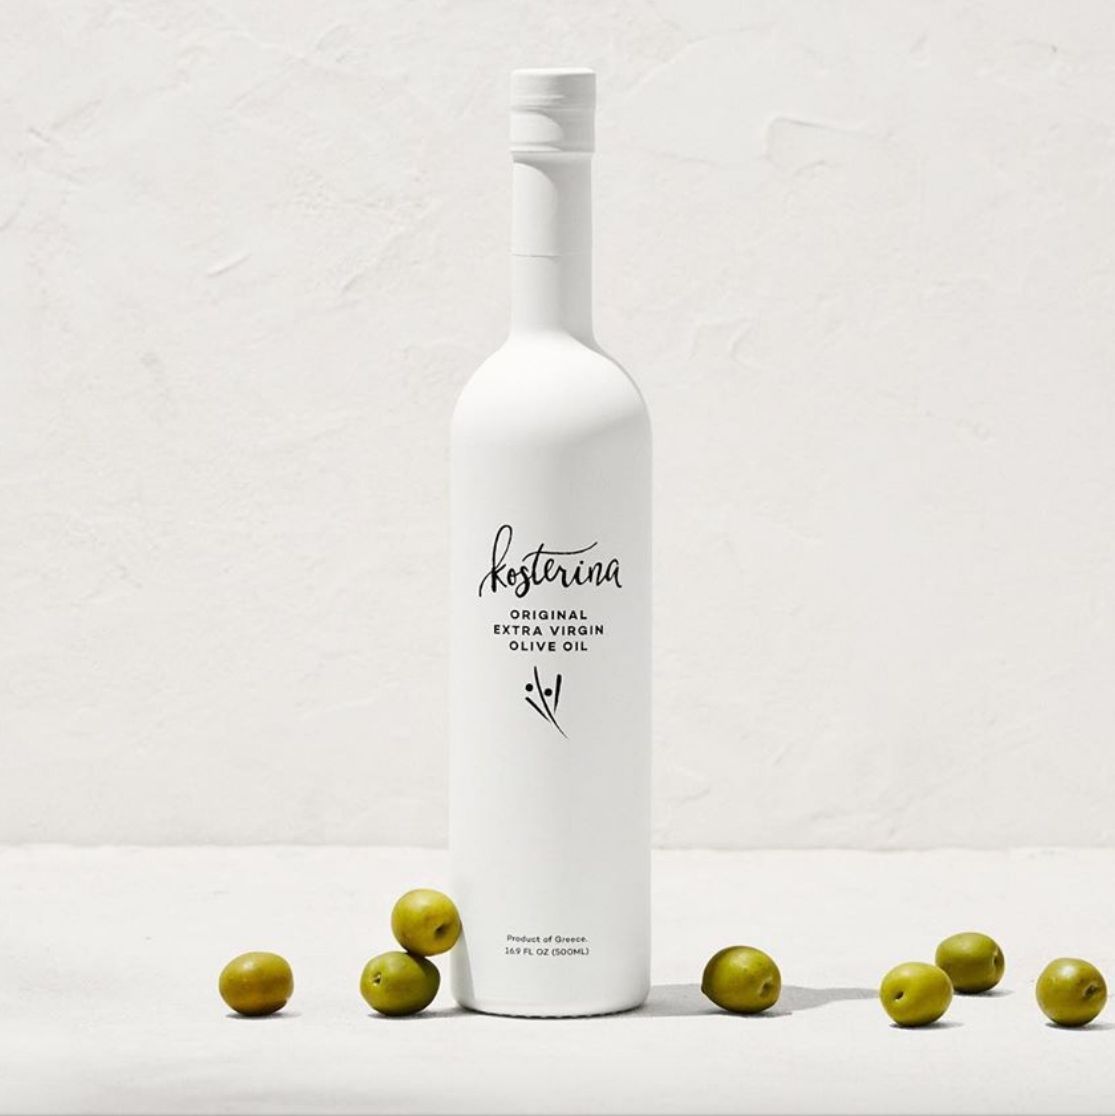 Kosterina Original Extra Virgin Olive Oil